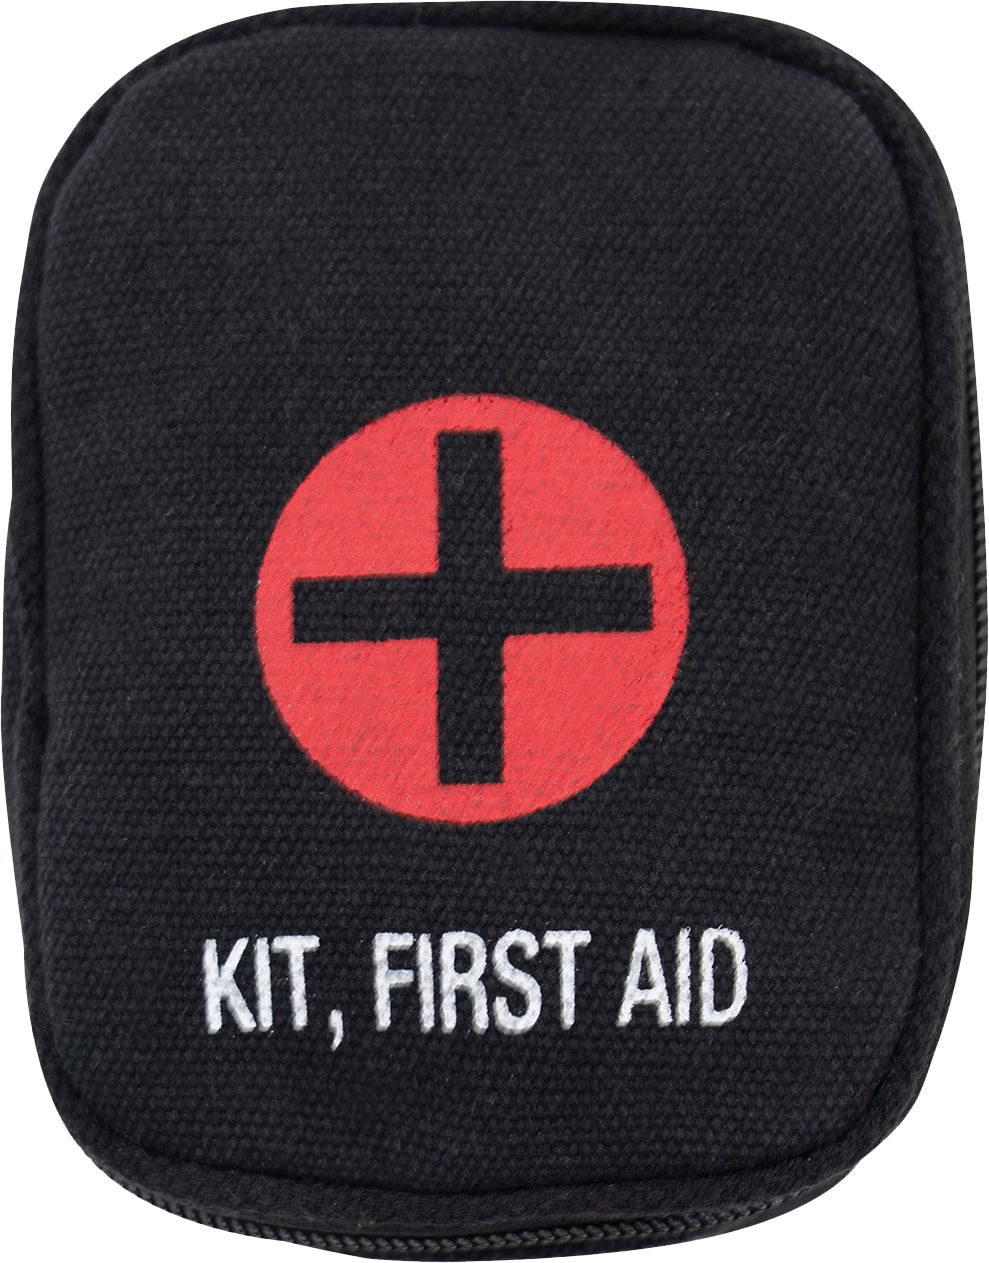 Black Military Zipper First Aid Kit Pouch